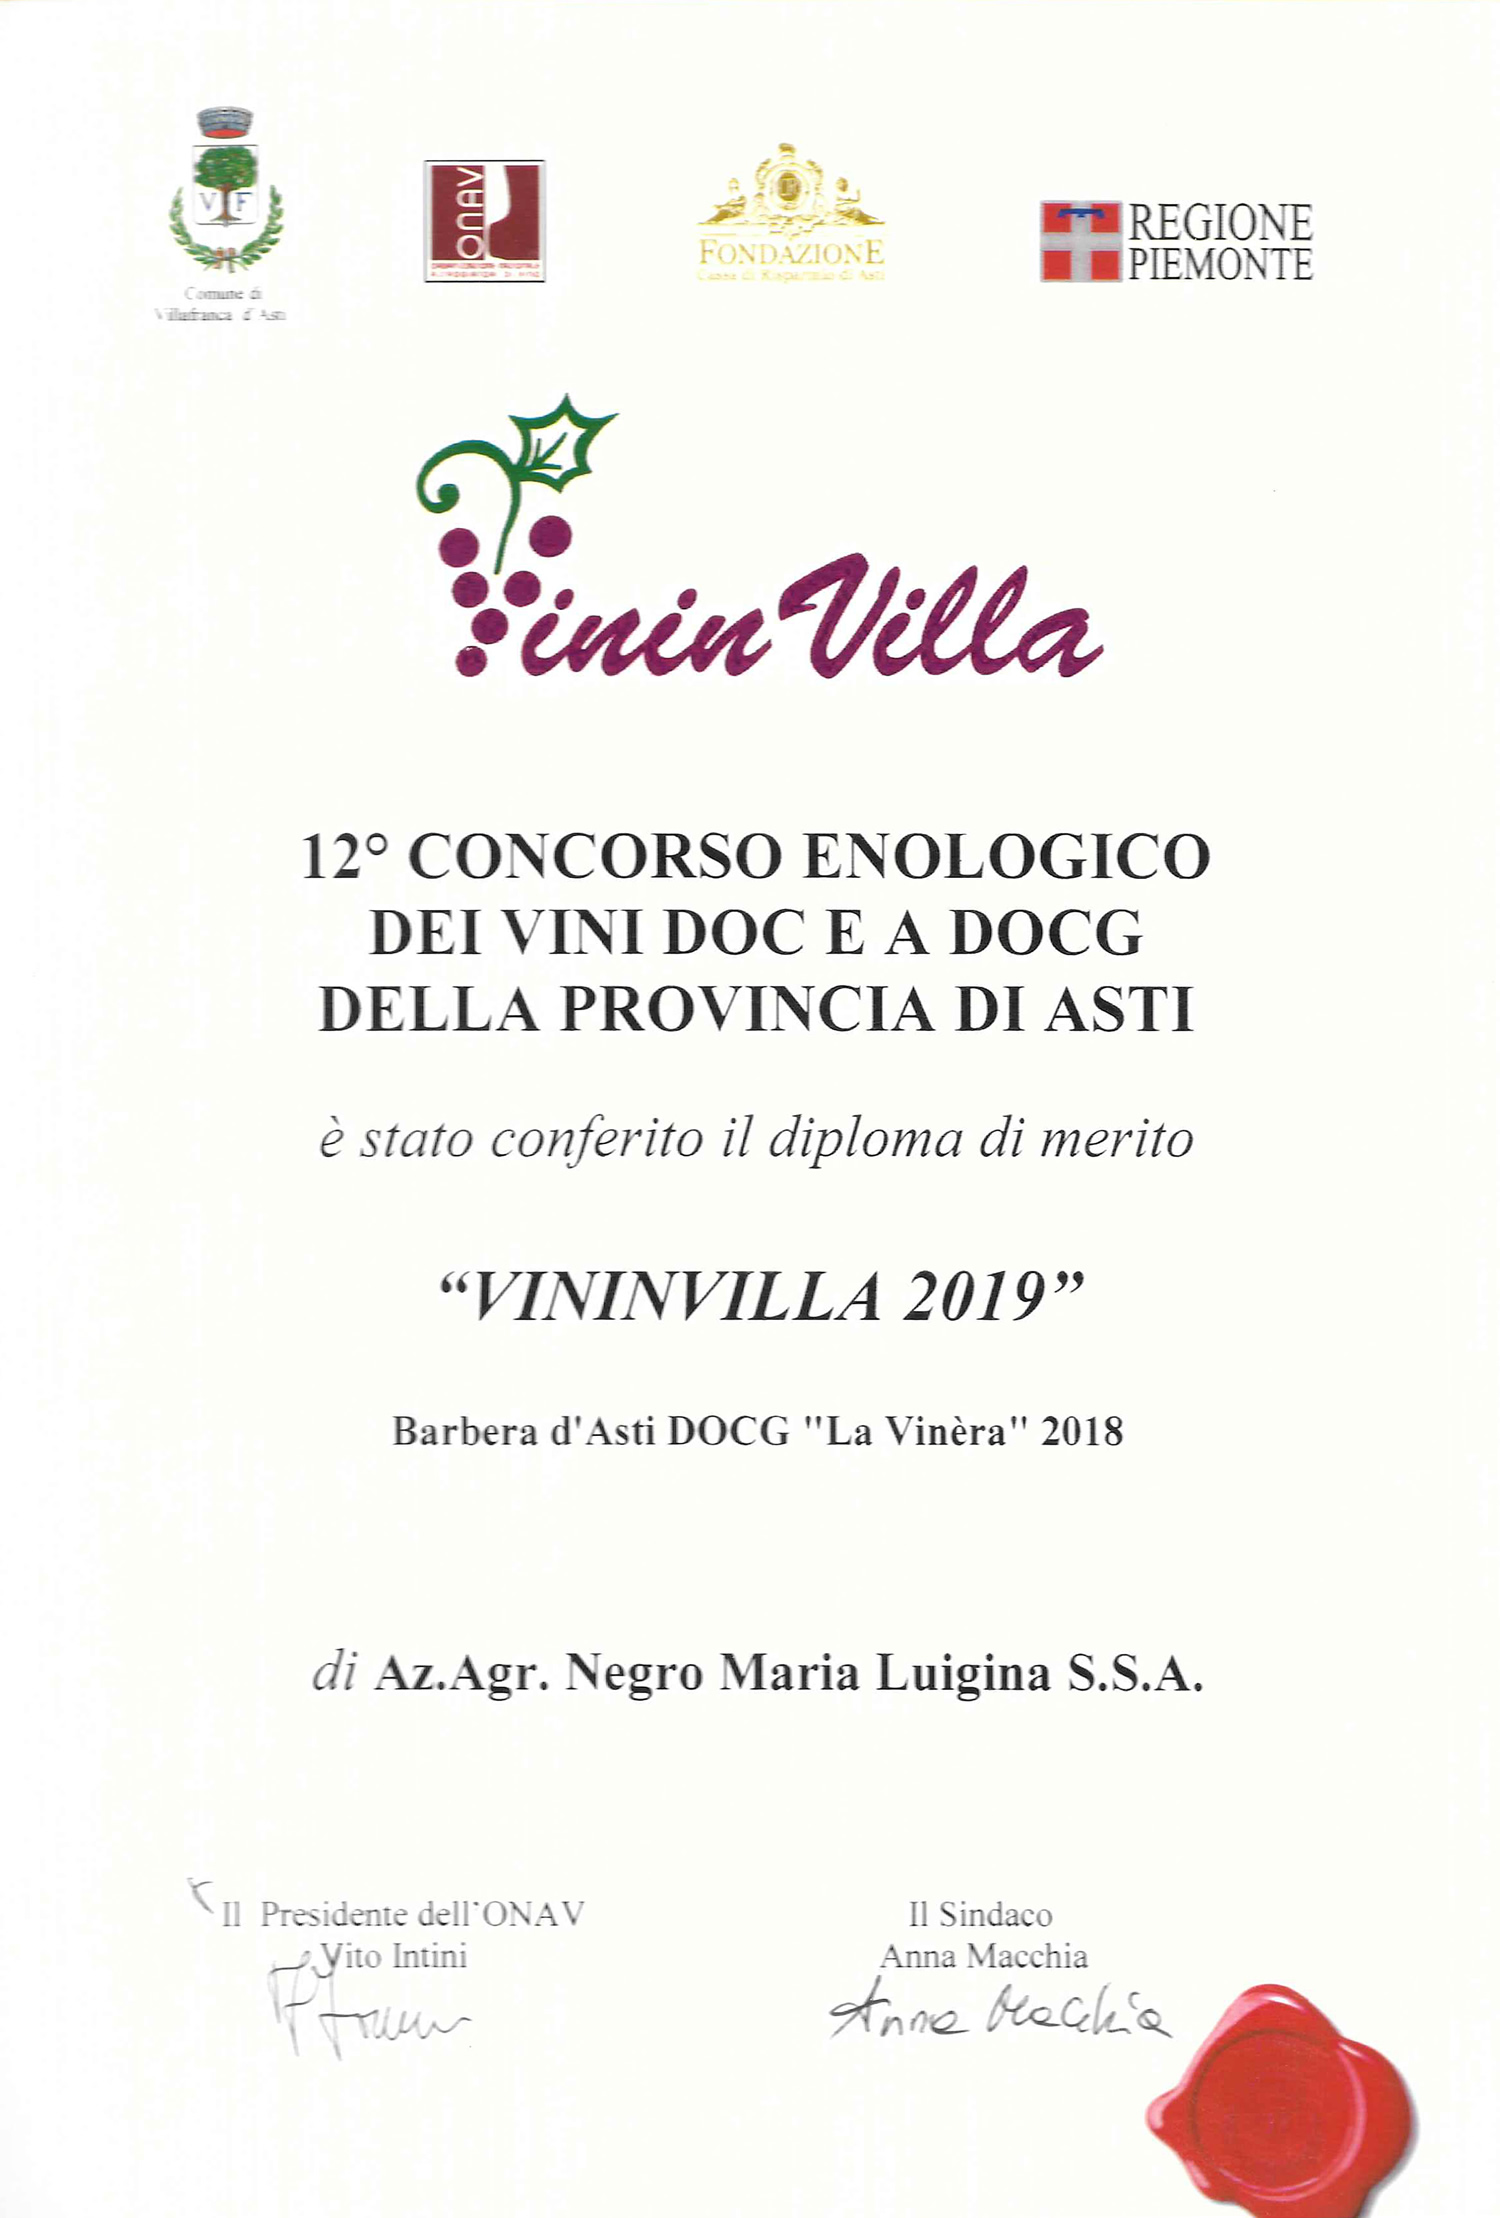 Vininvilla 2019 - Barbera d'Asti D.O.C.G. "La Vinèra" 2018.